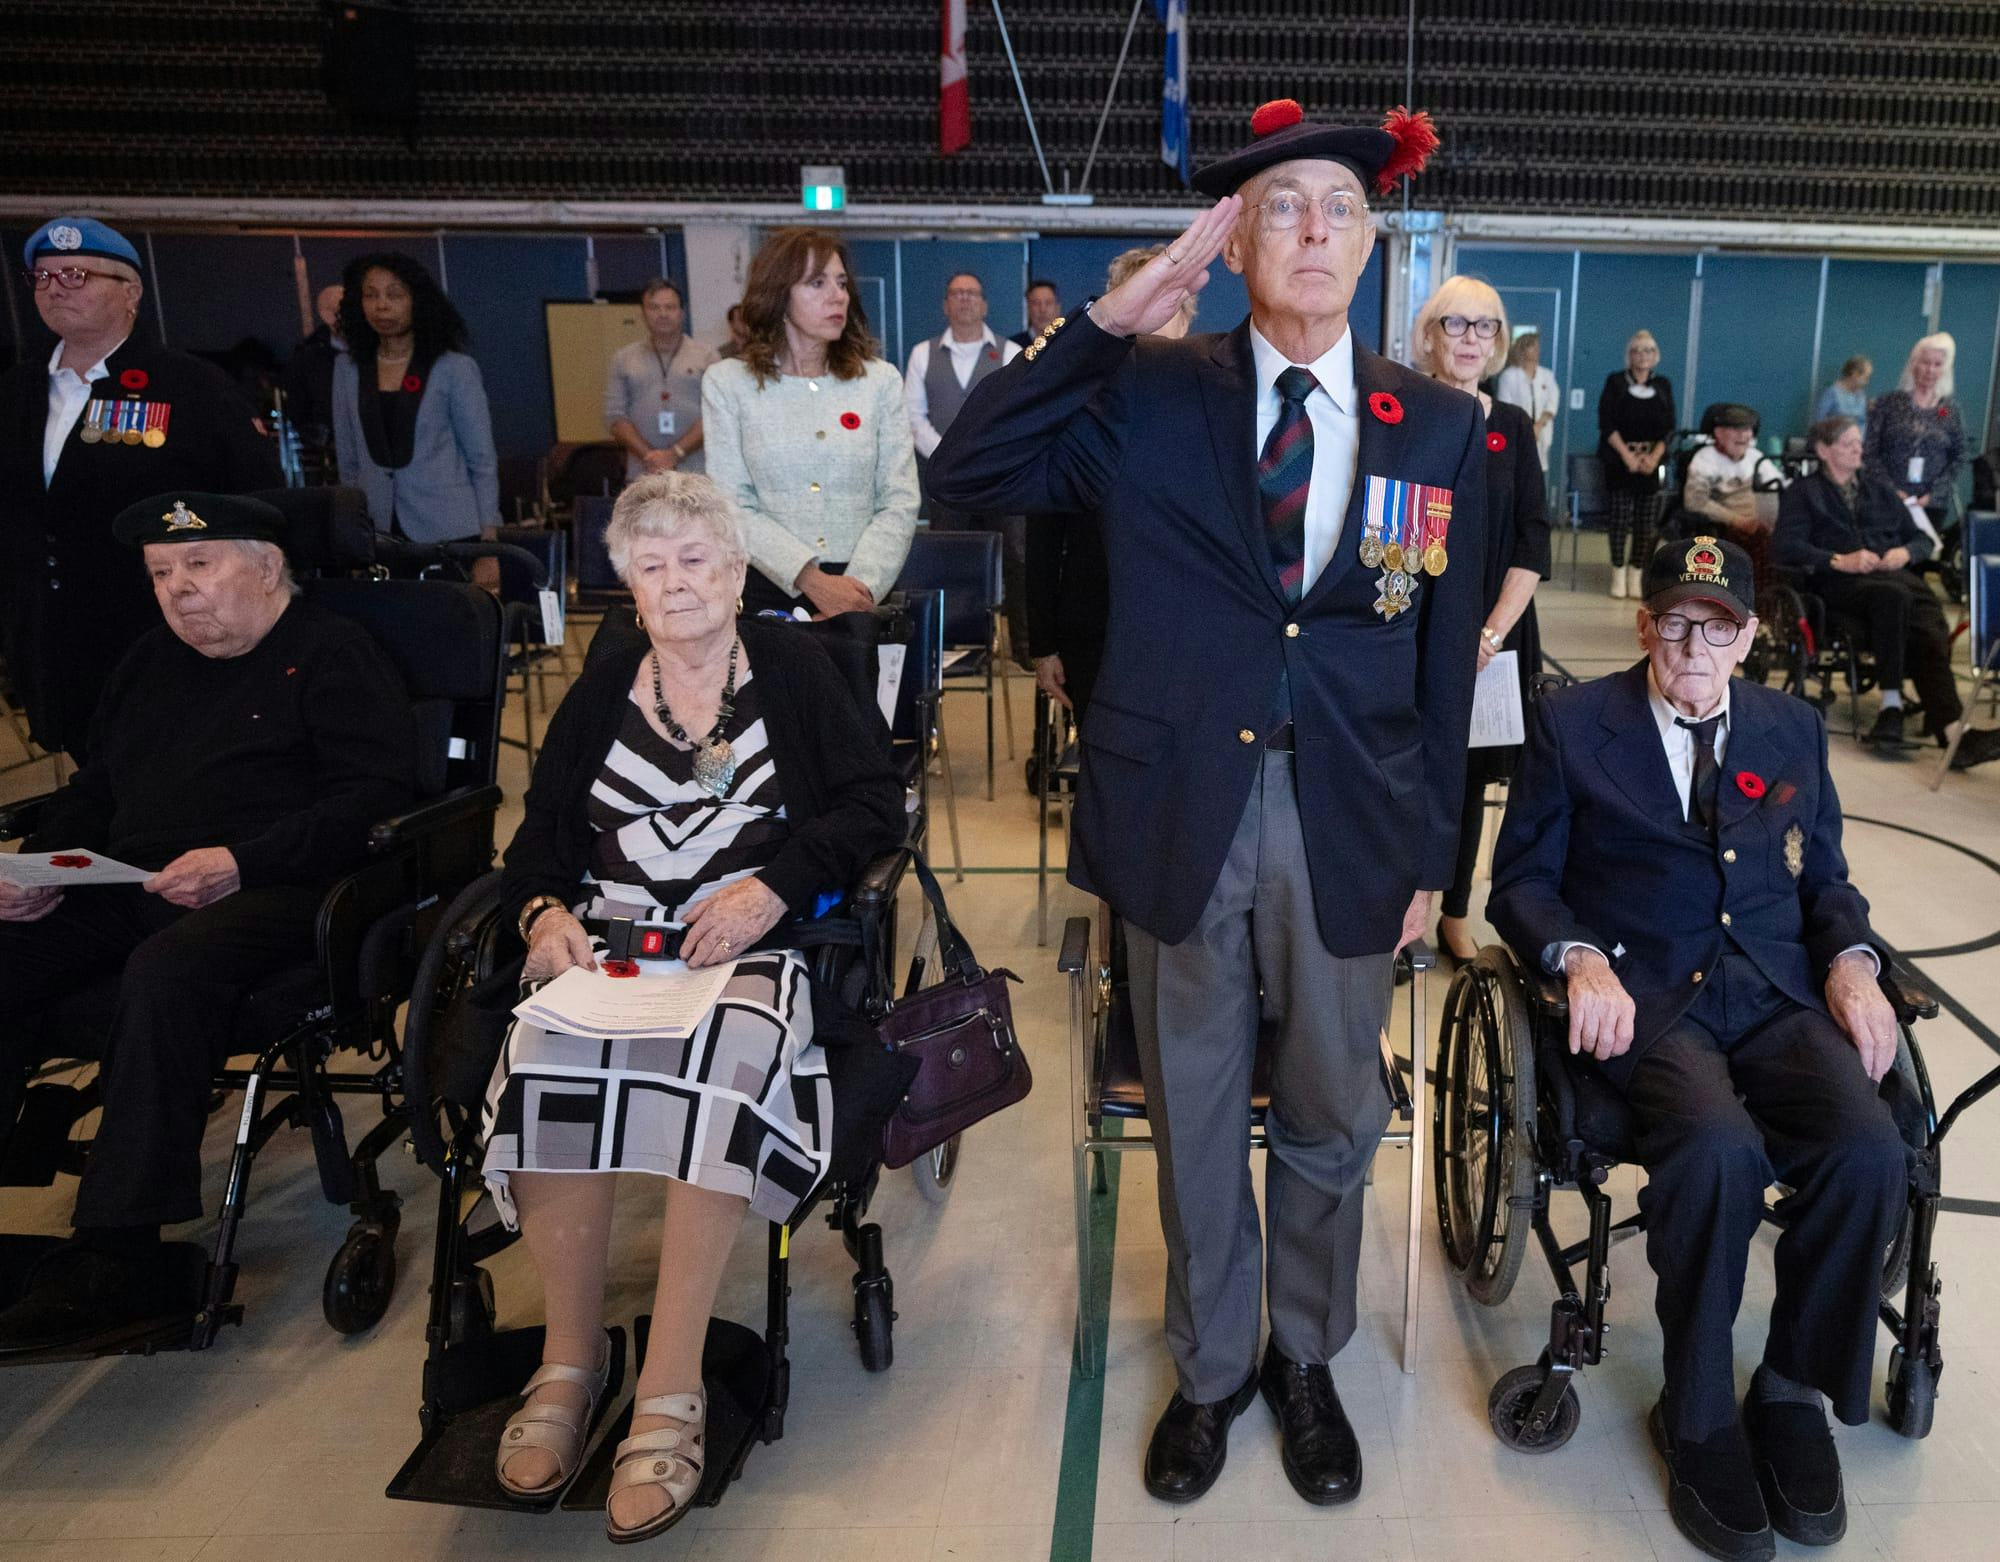 Several veterans in formal attire wearing poppies.